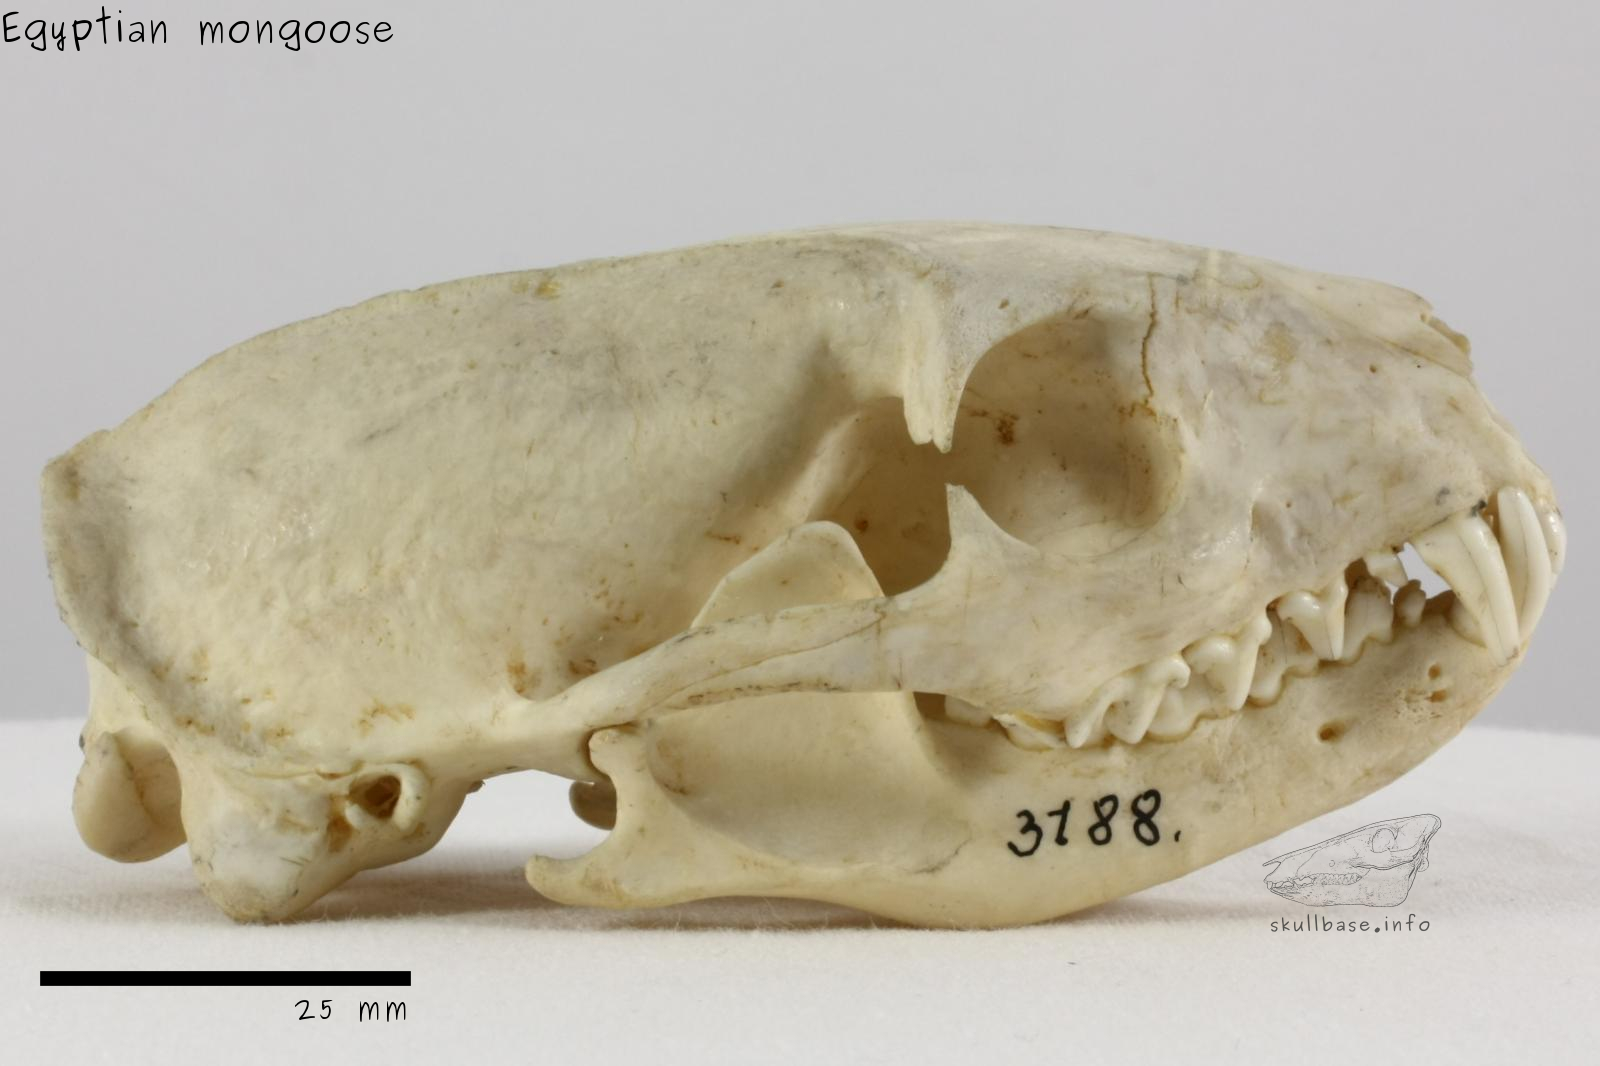 Egyptian mongoose (Herpestes ichneumon) skull lateral view